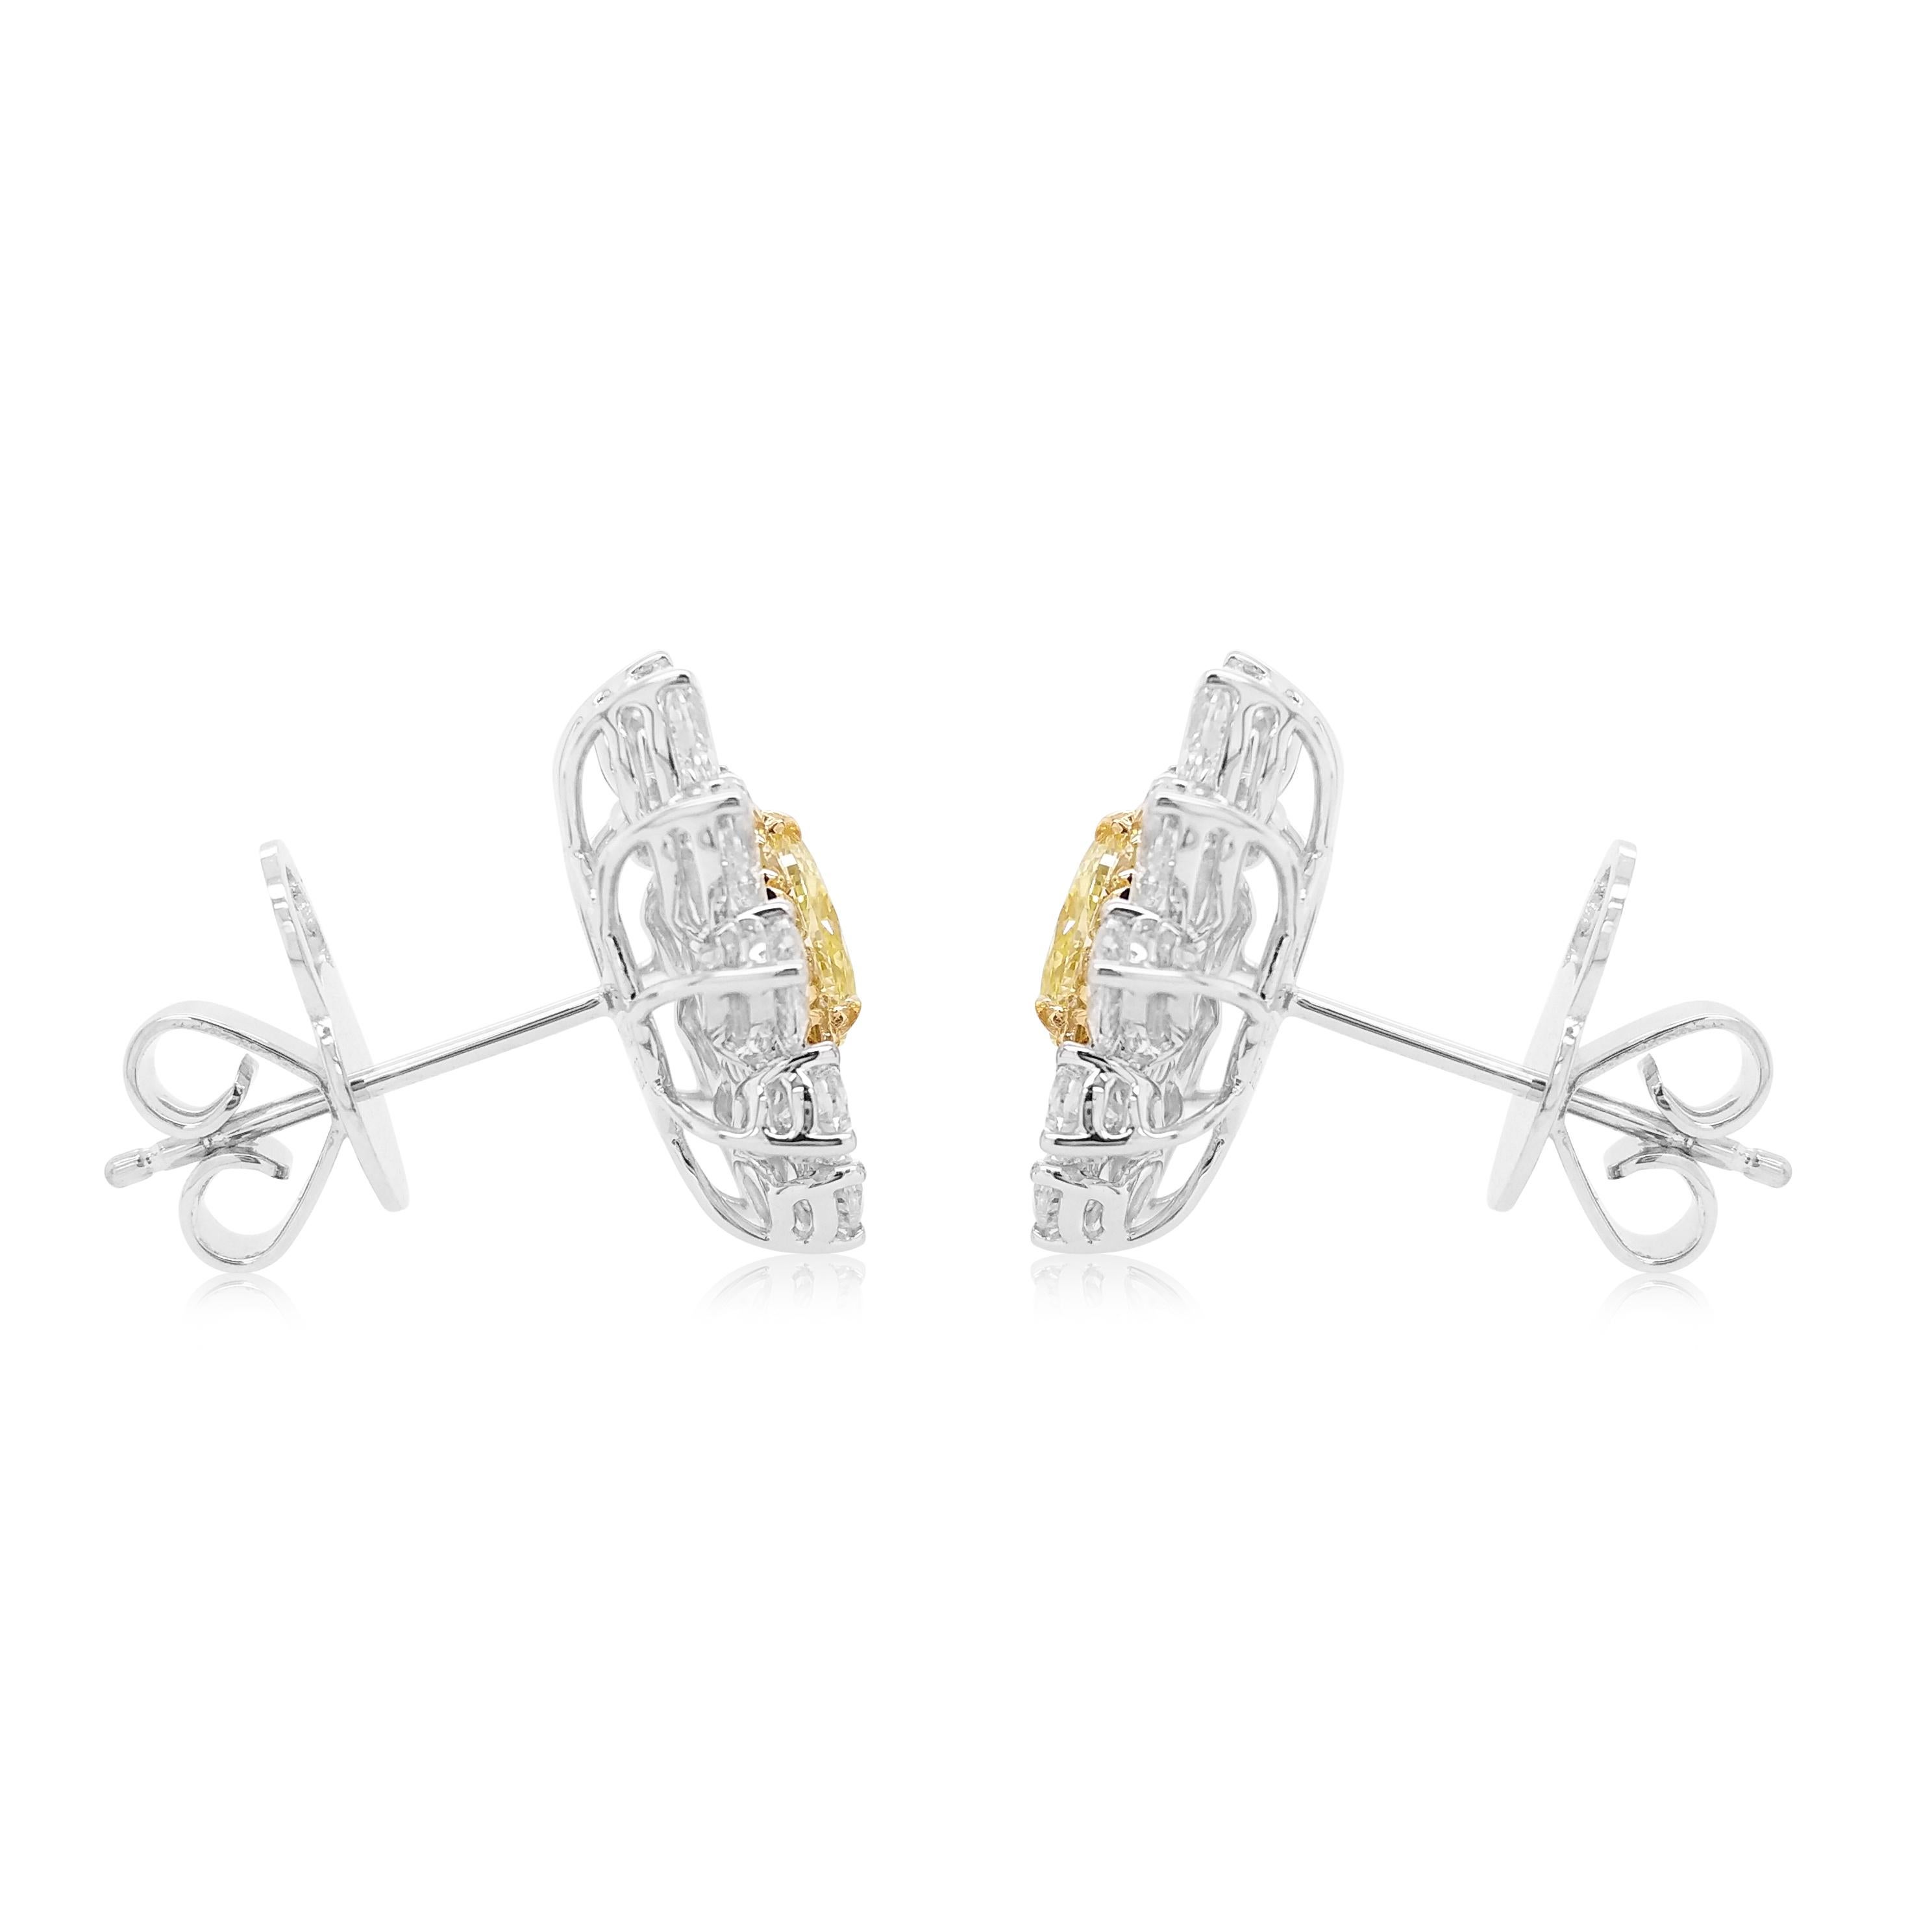 Oval Cut GIA Certified Yellow Diamond 18K Gold Stud Earrings